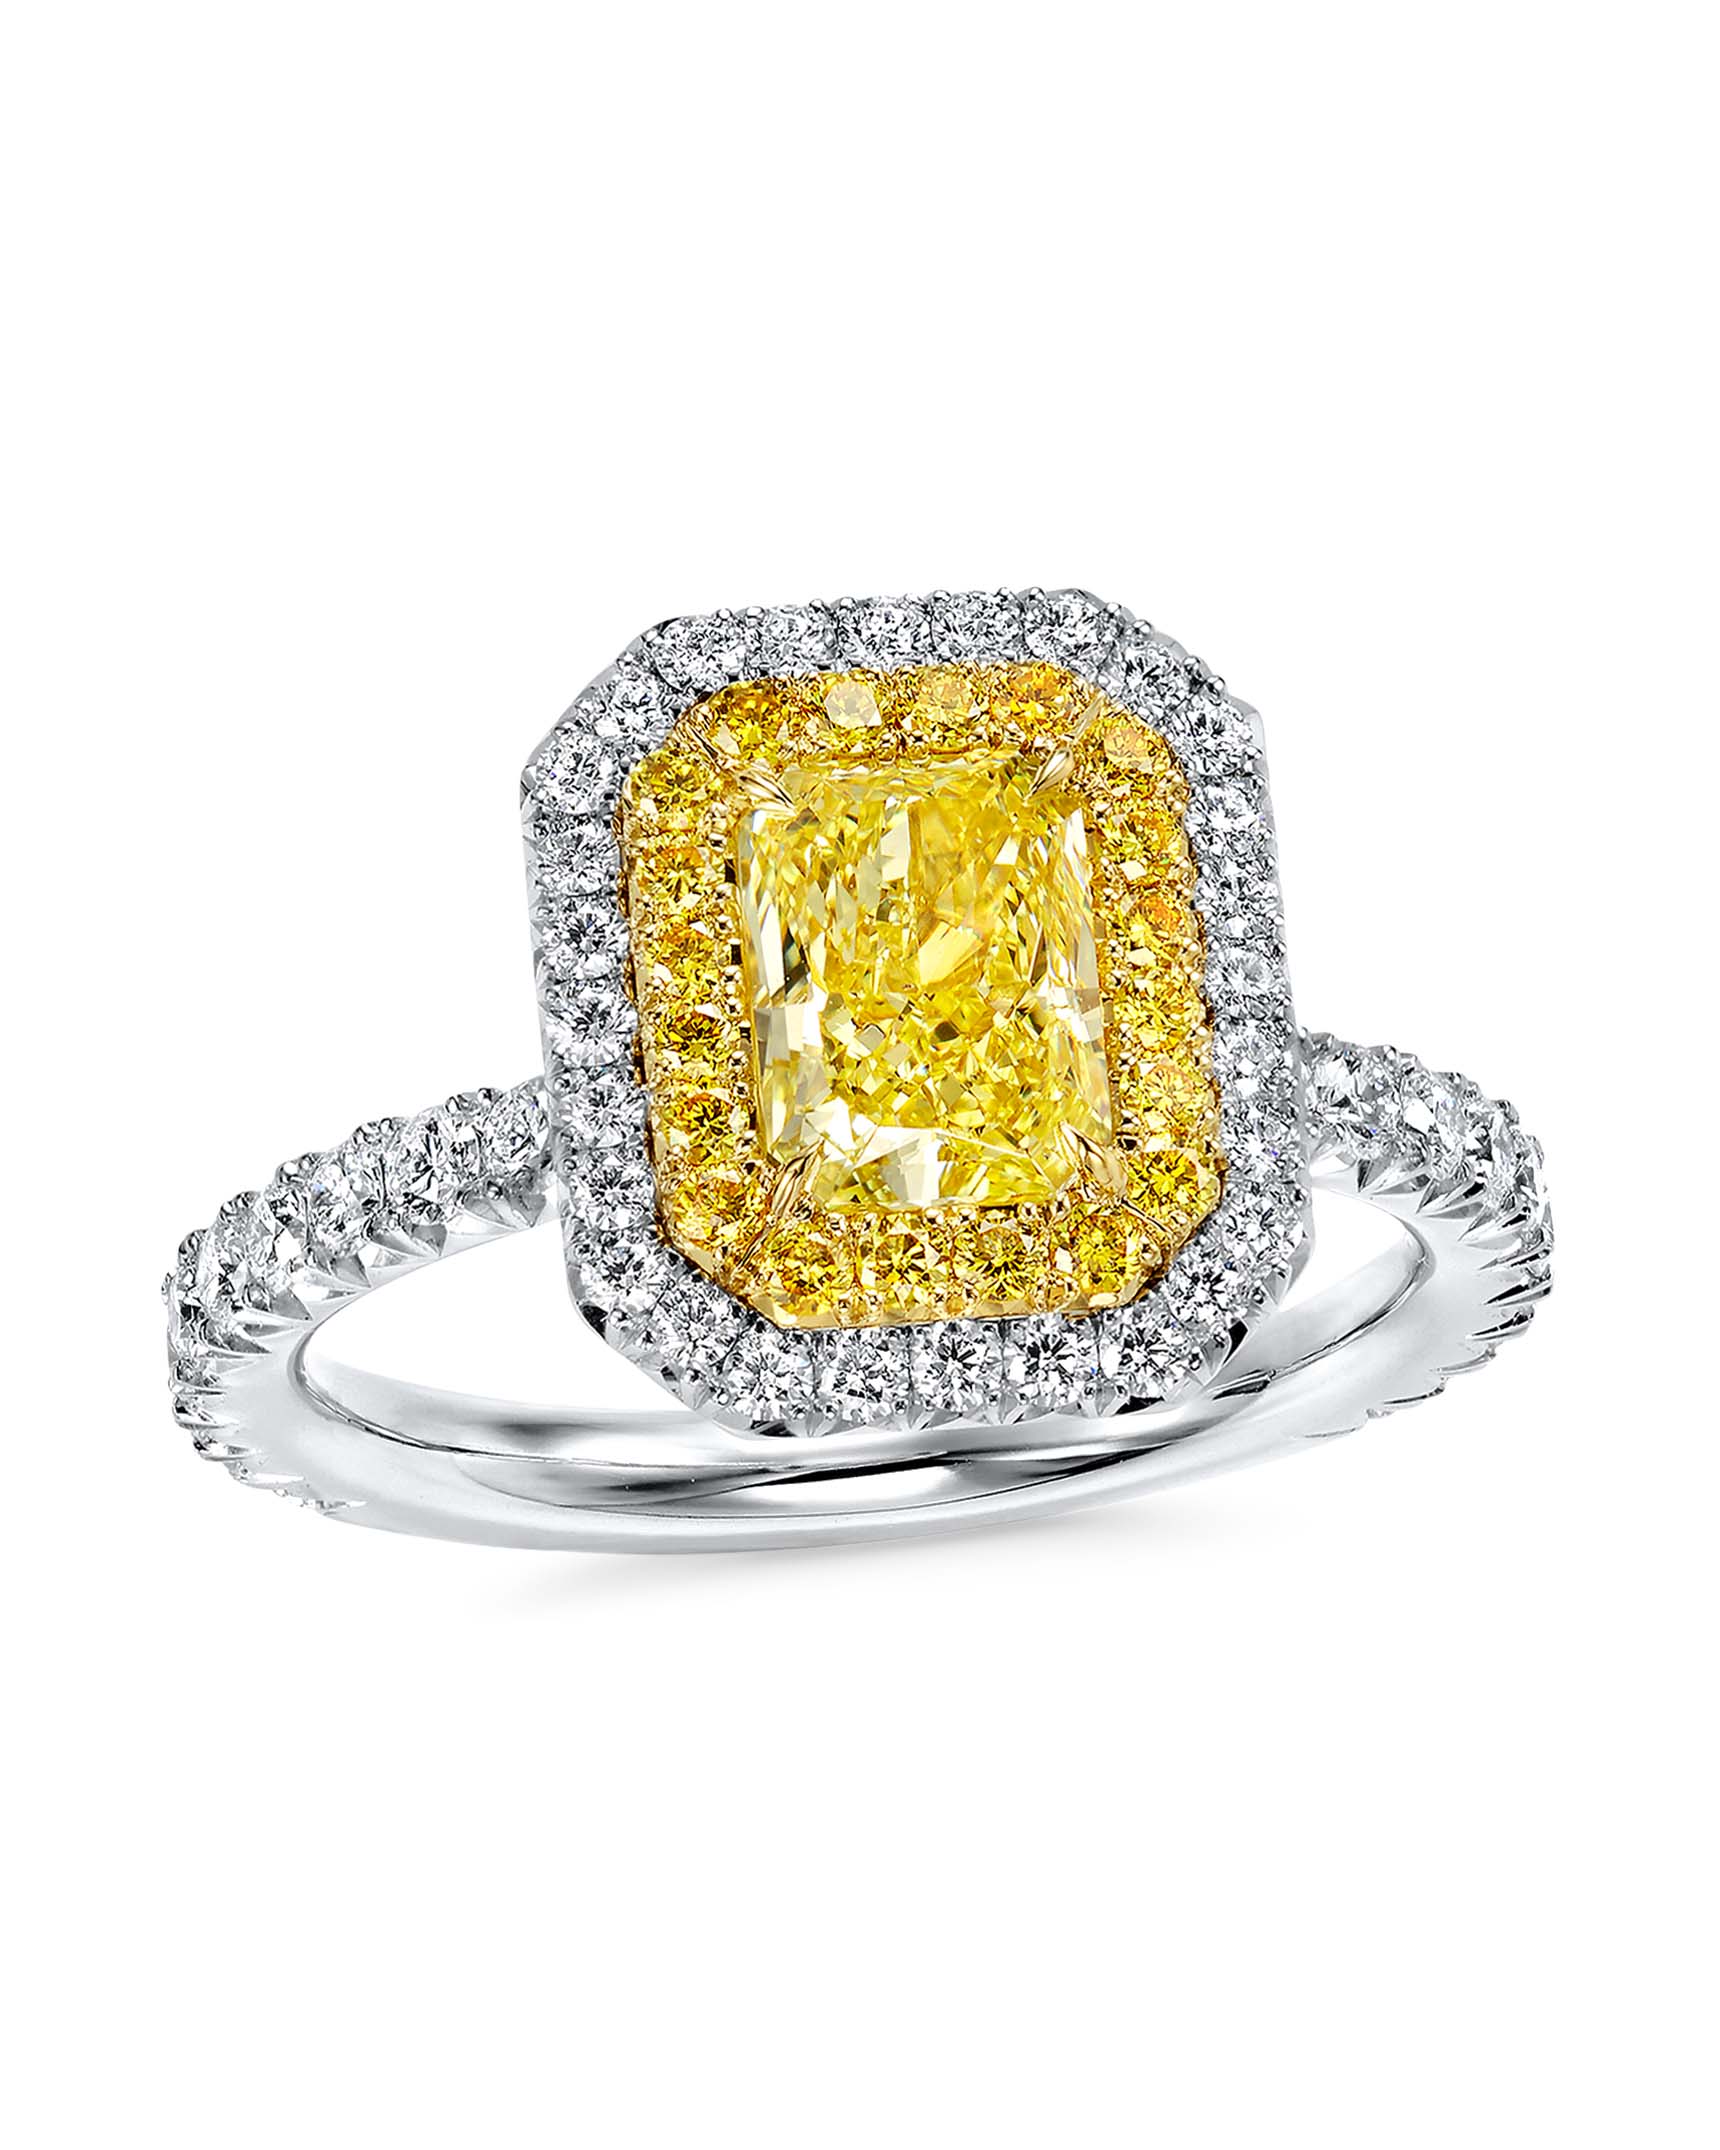 Large Emerald-Cut Yellow Diamond Ring